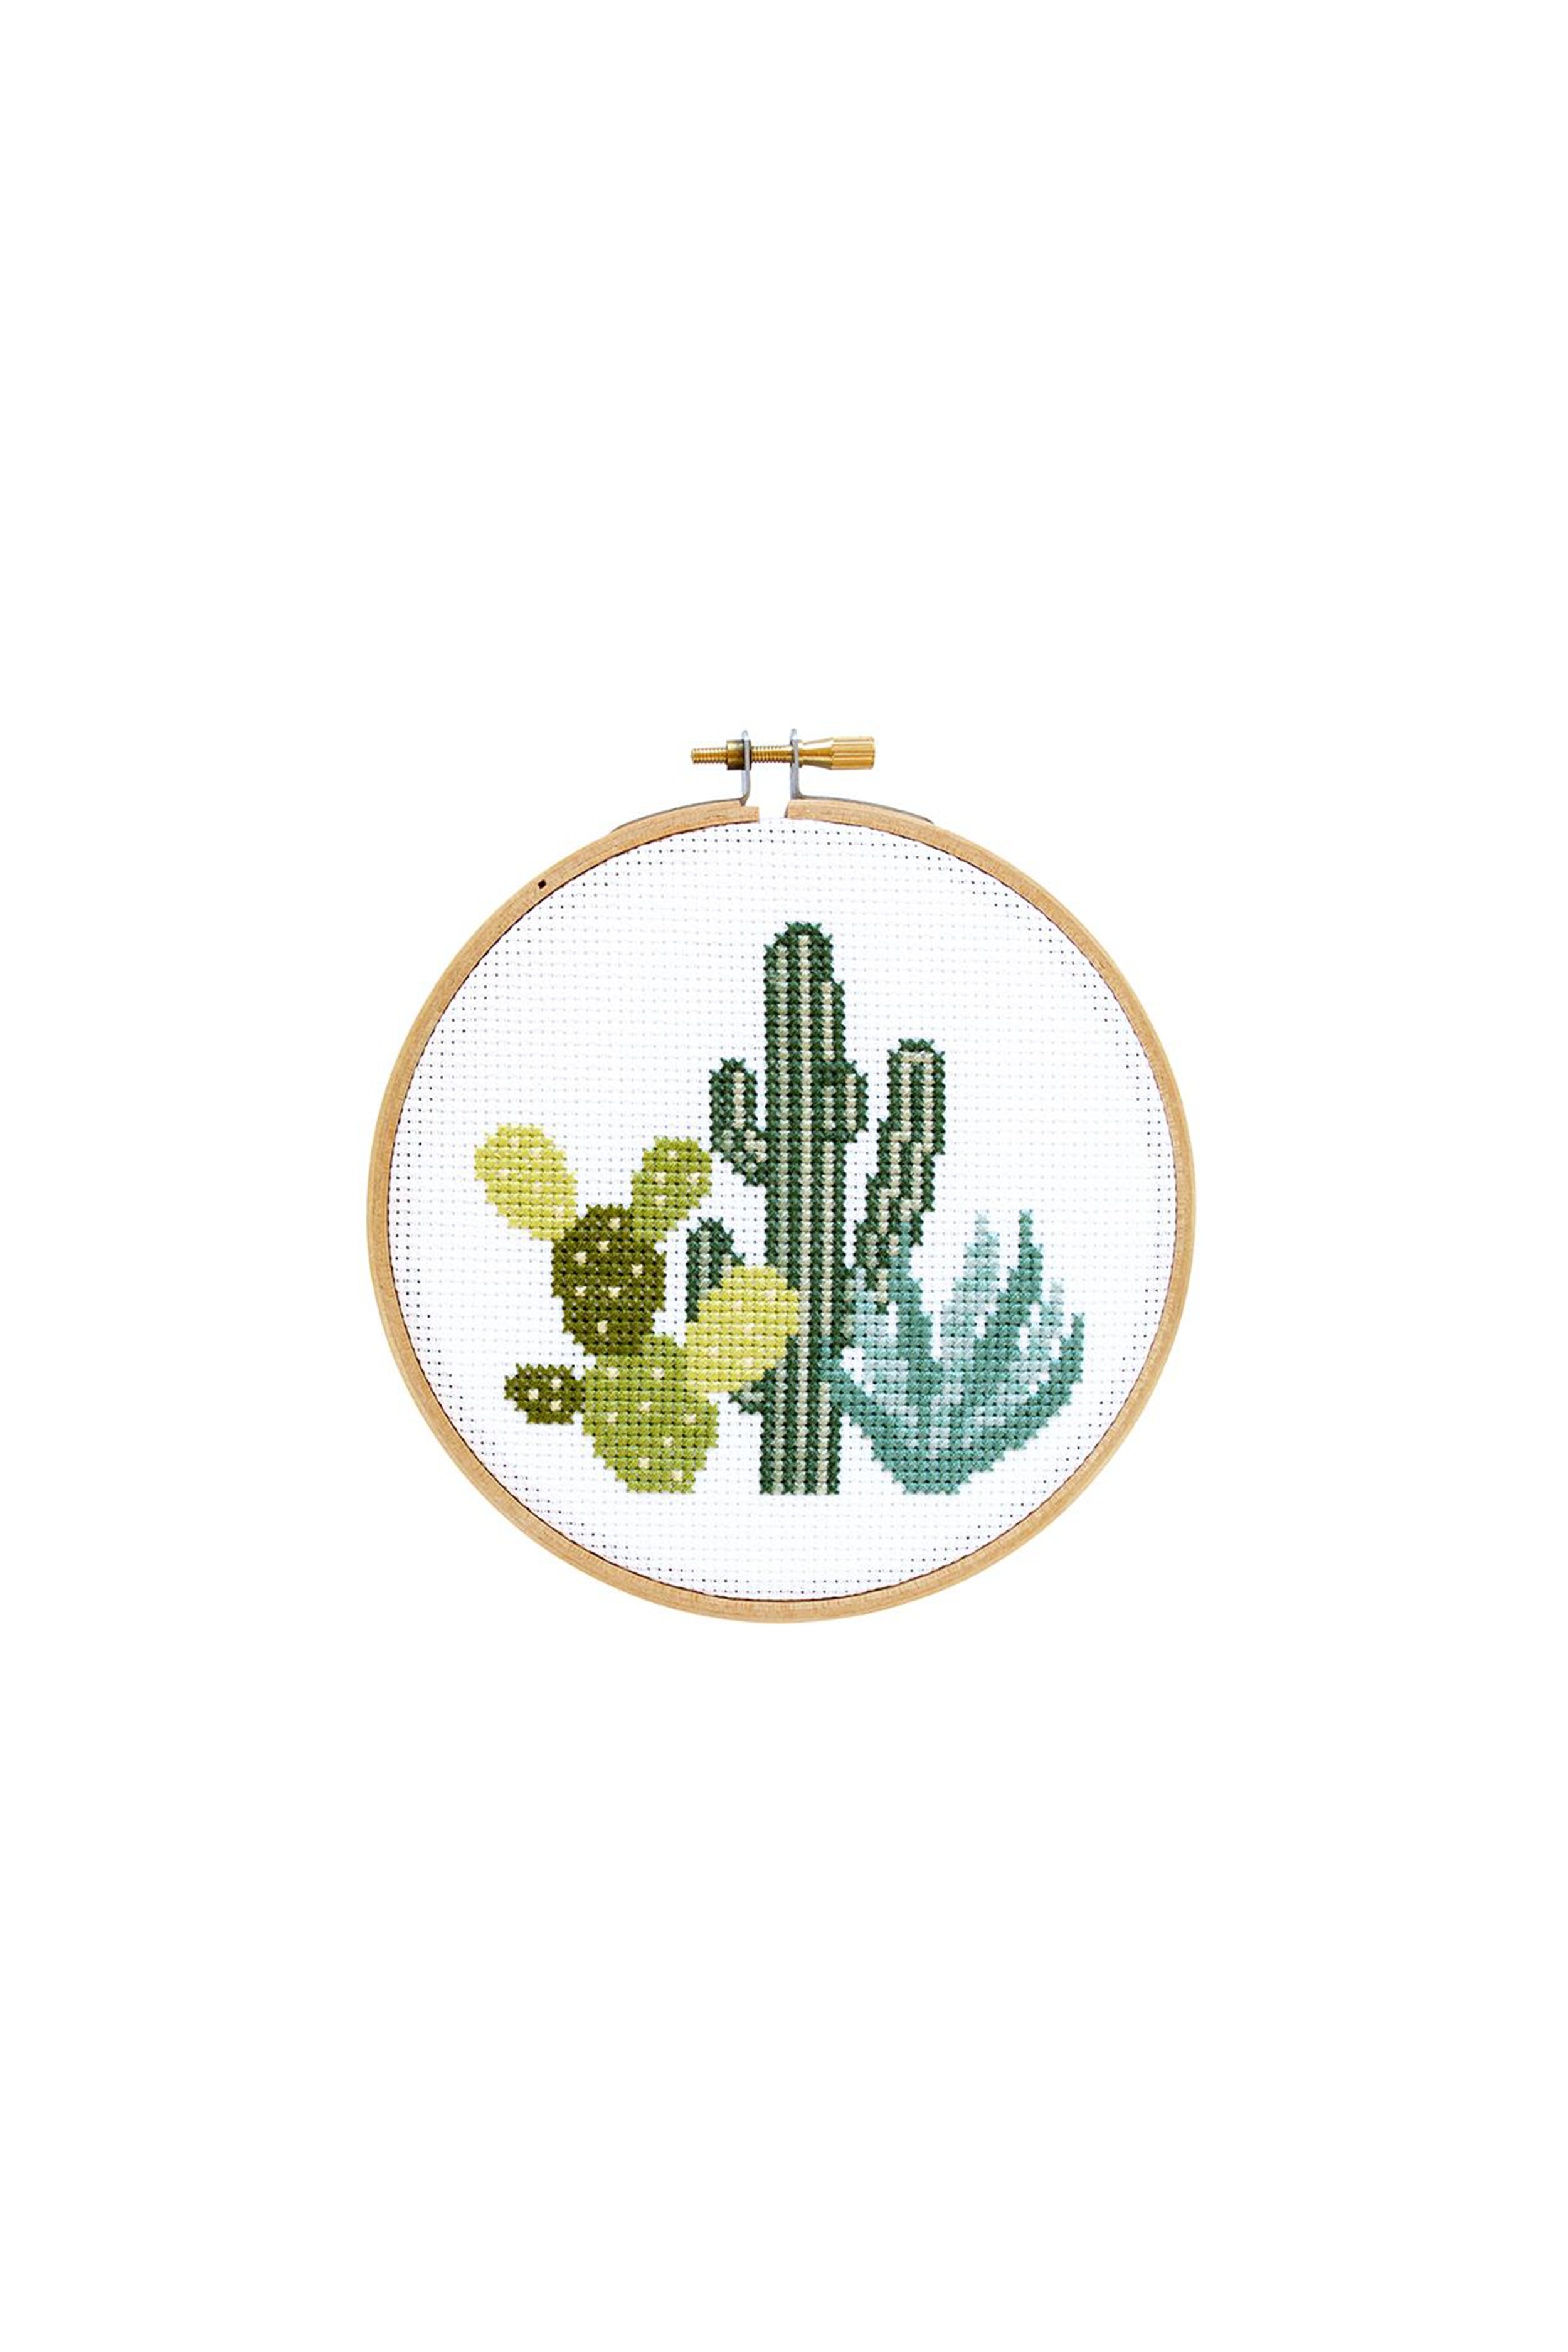 Desert Cacti DIY Cross Stitch Kit